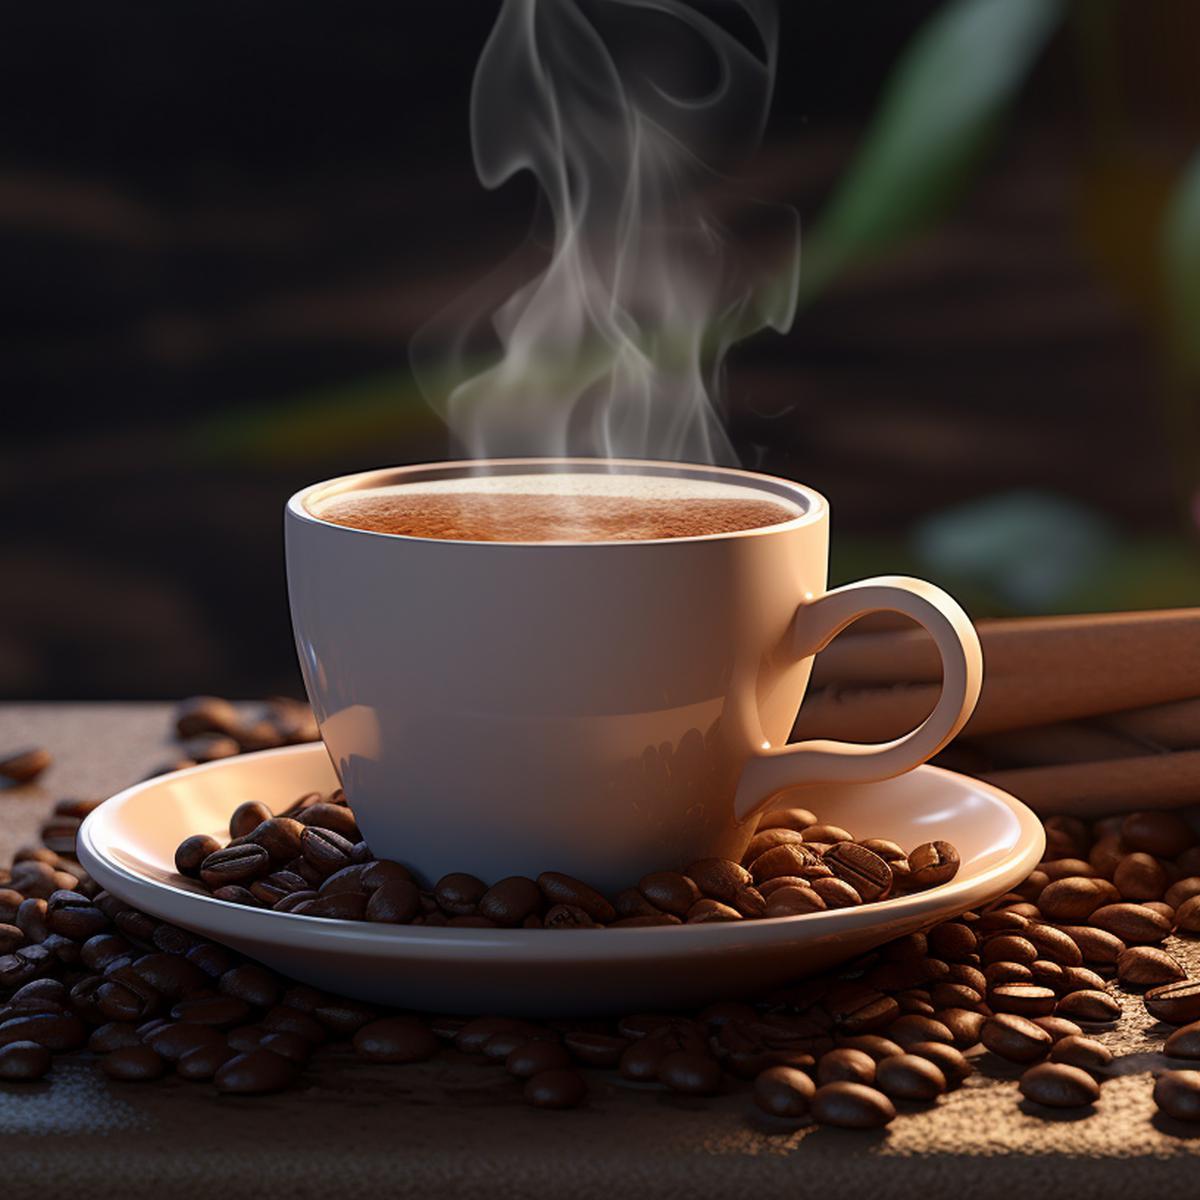 Taza para espresso – Lima con Cafeina